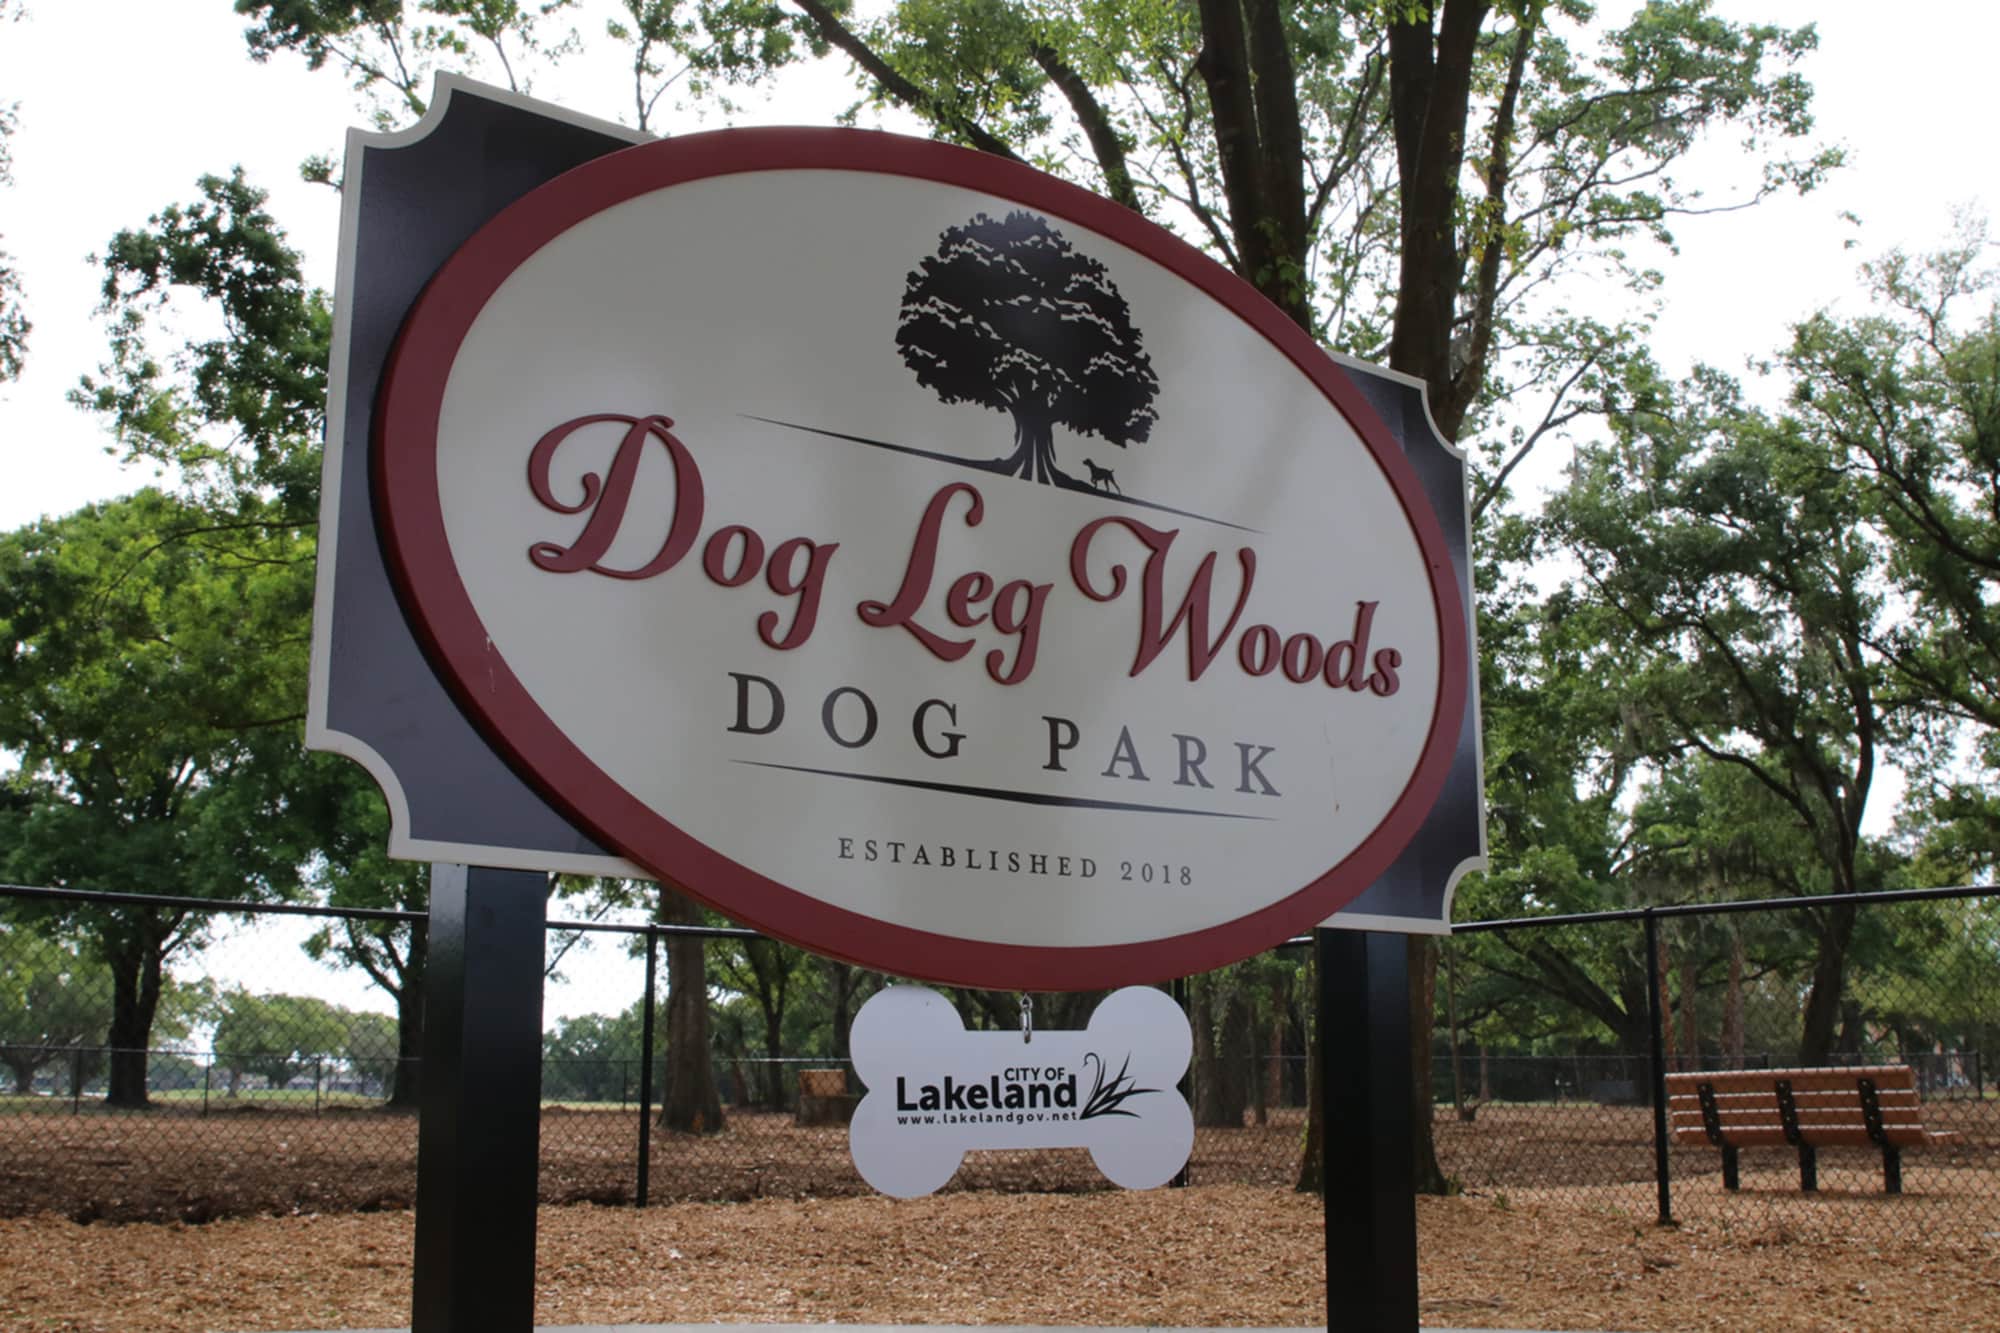 Sign at Dog Leg Woods Dog Park in Lakeland, FL